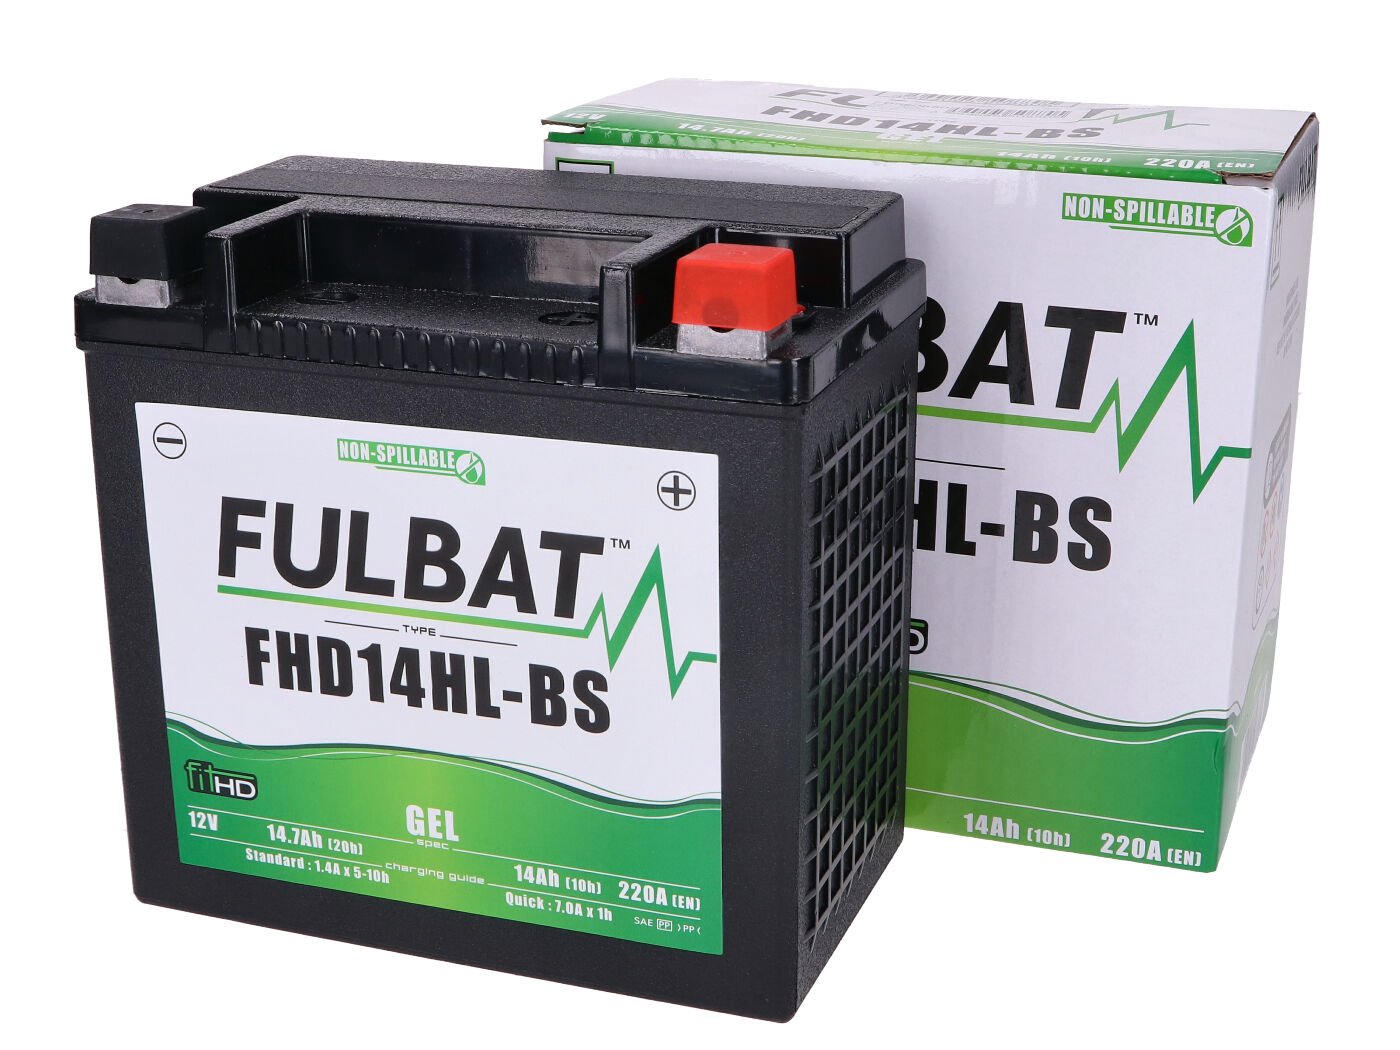 Fulbat FHD14HL-BS GEL Batterie